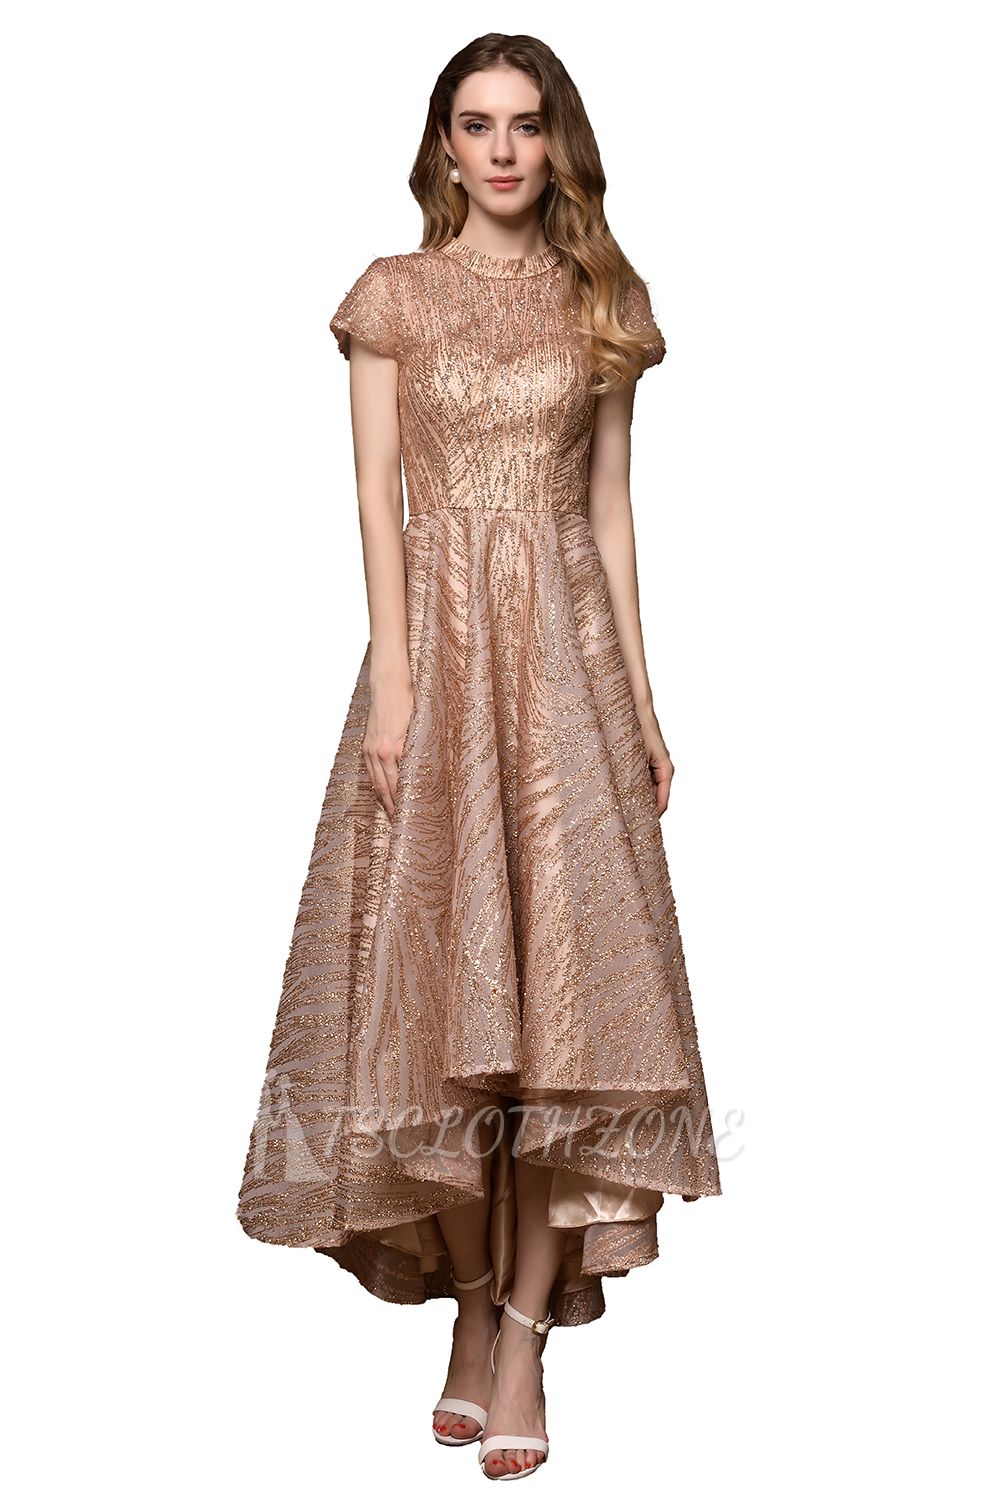 Ardolf | High neck Short Sleeve Champange Sequined High Low Prom Dress